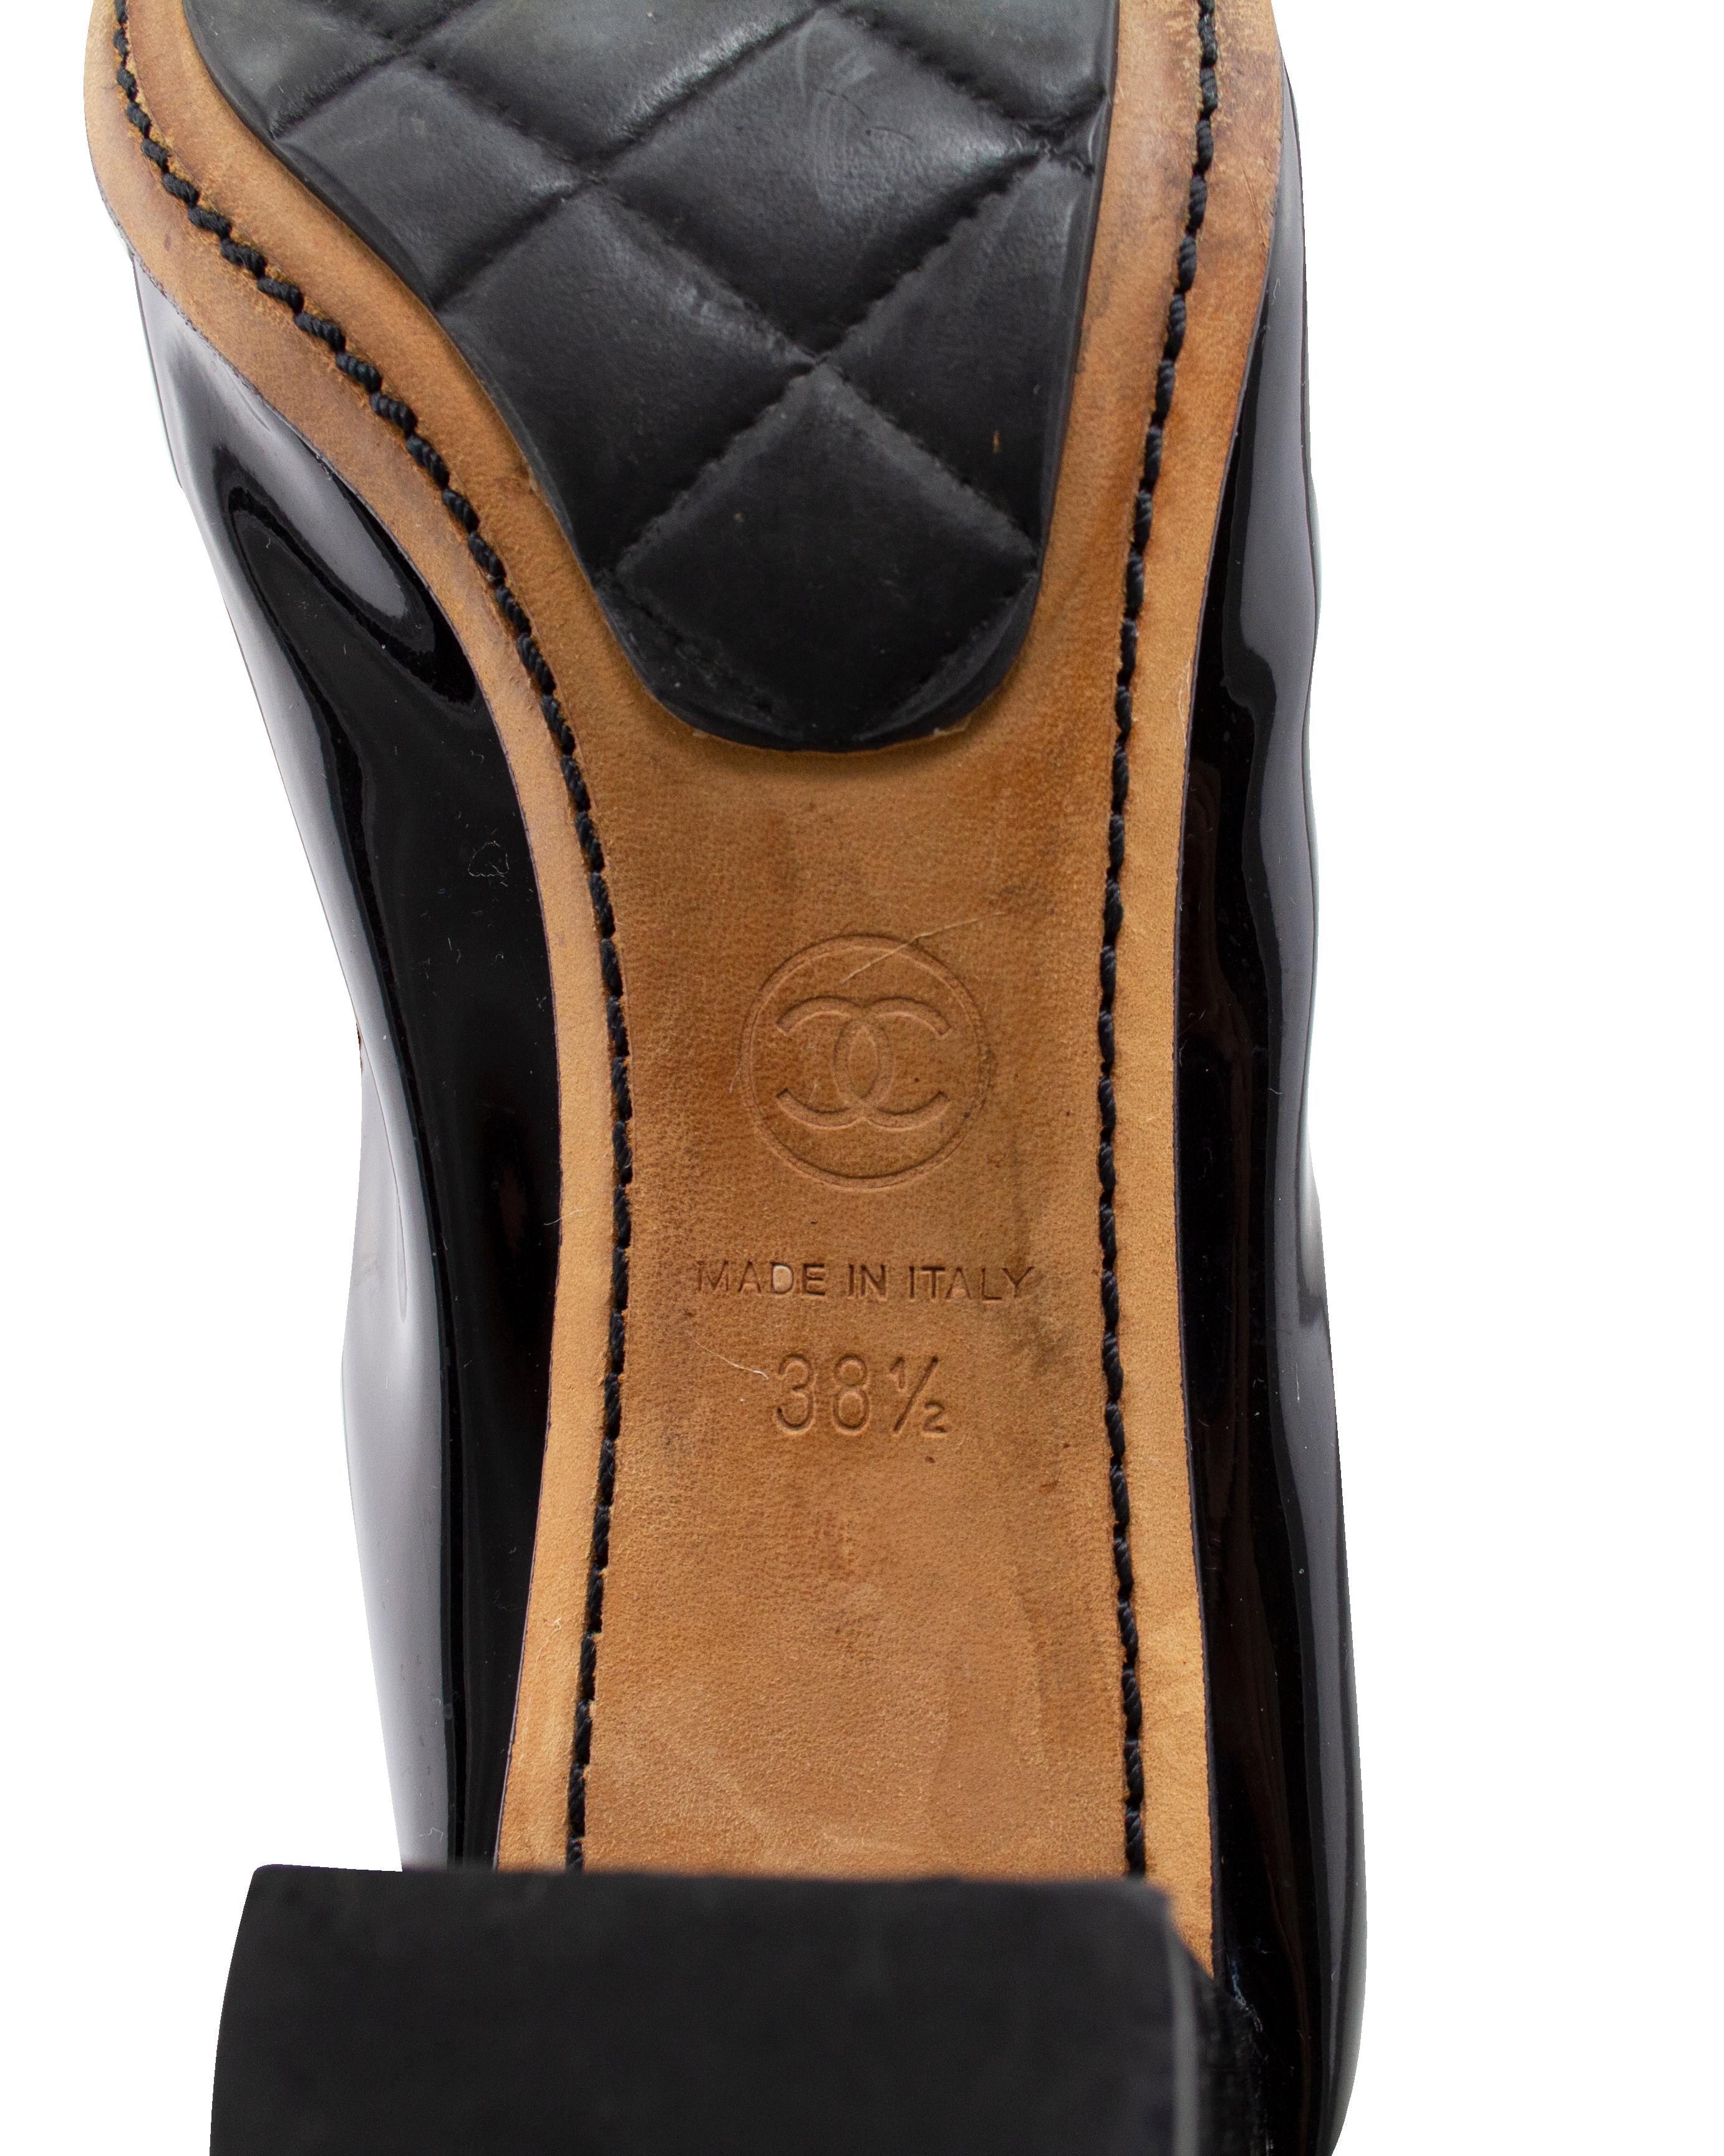 Mid 2000s Chanel Black Patent Leather Pumps 3